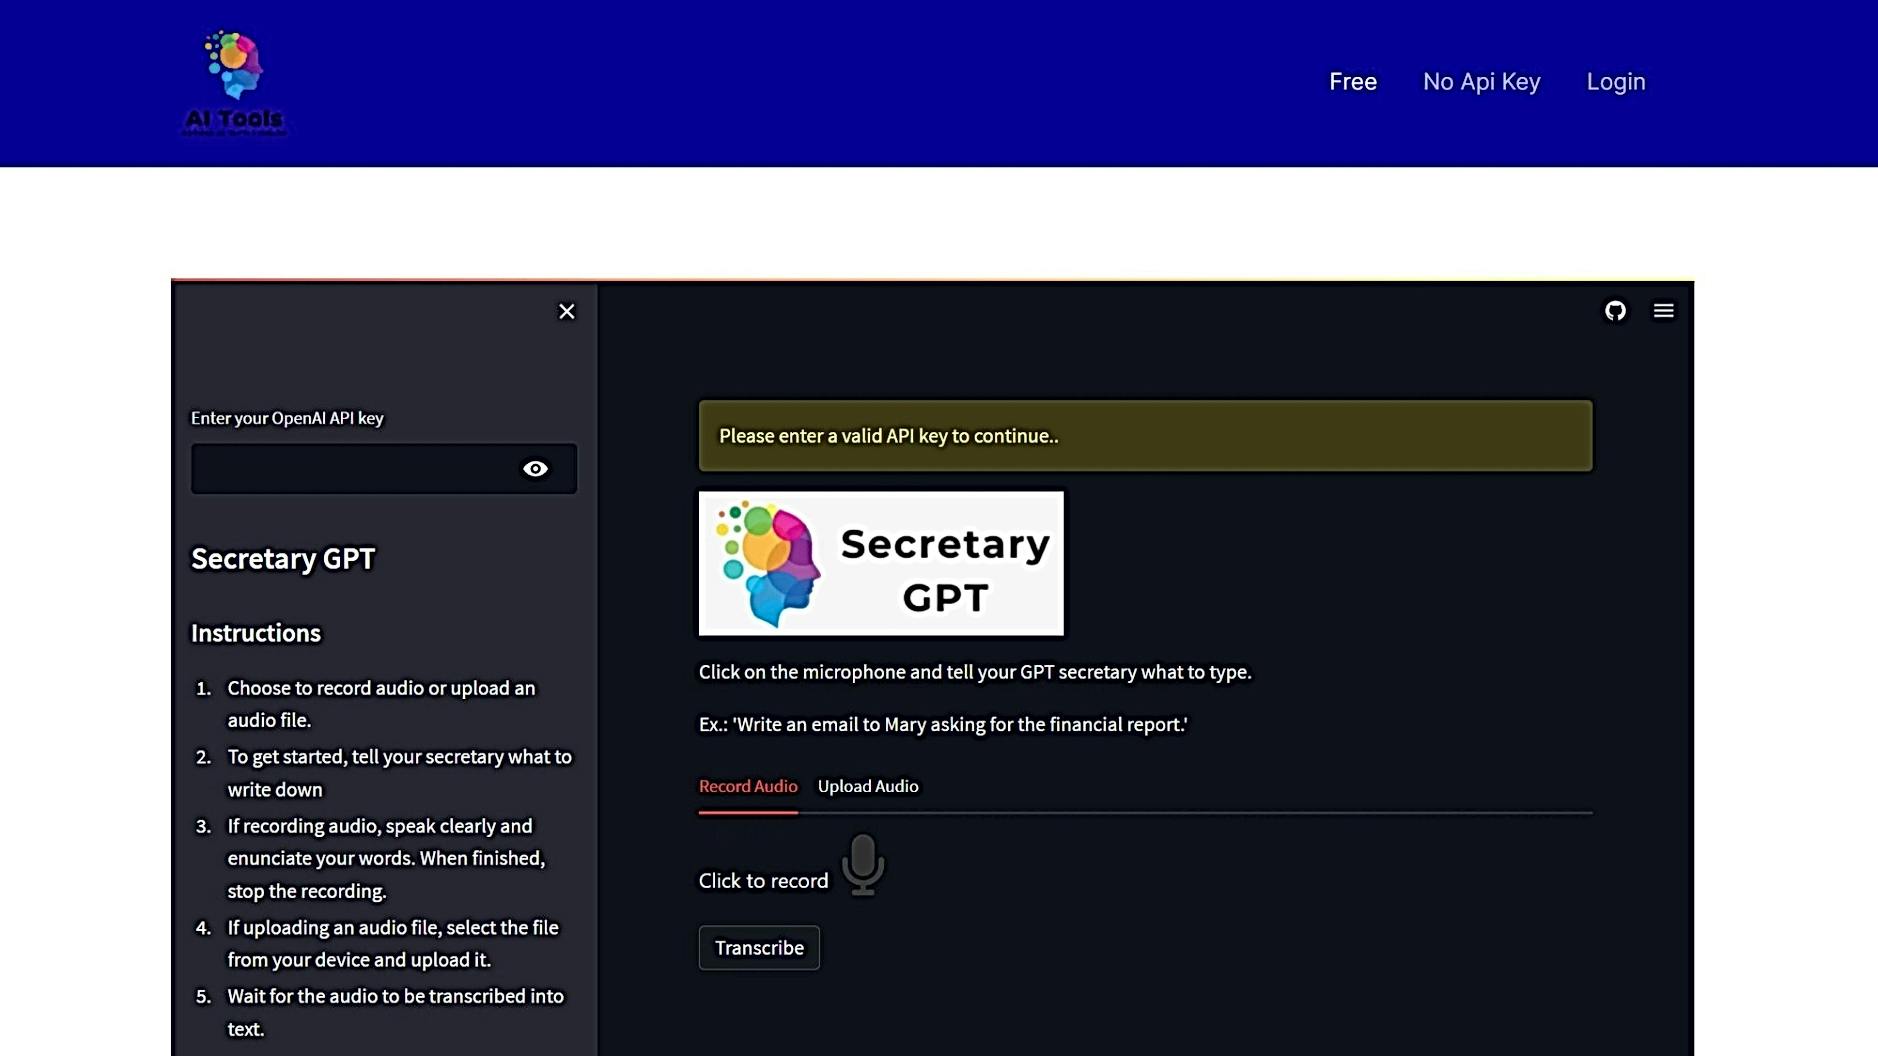 Secretary GPT featured